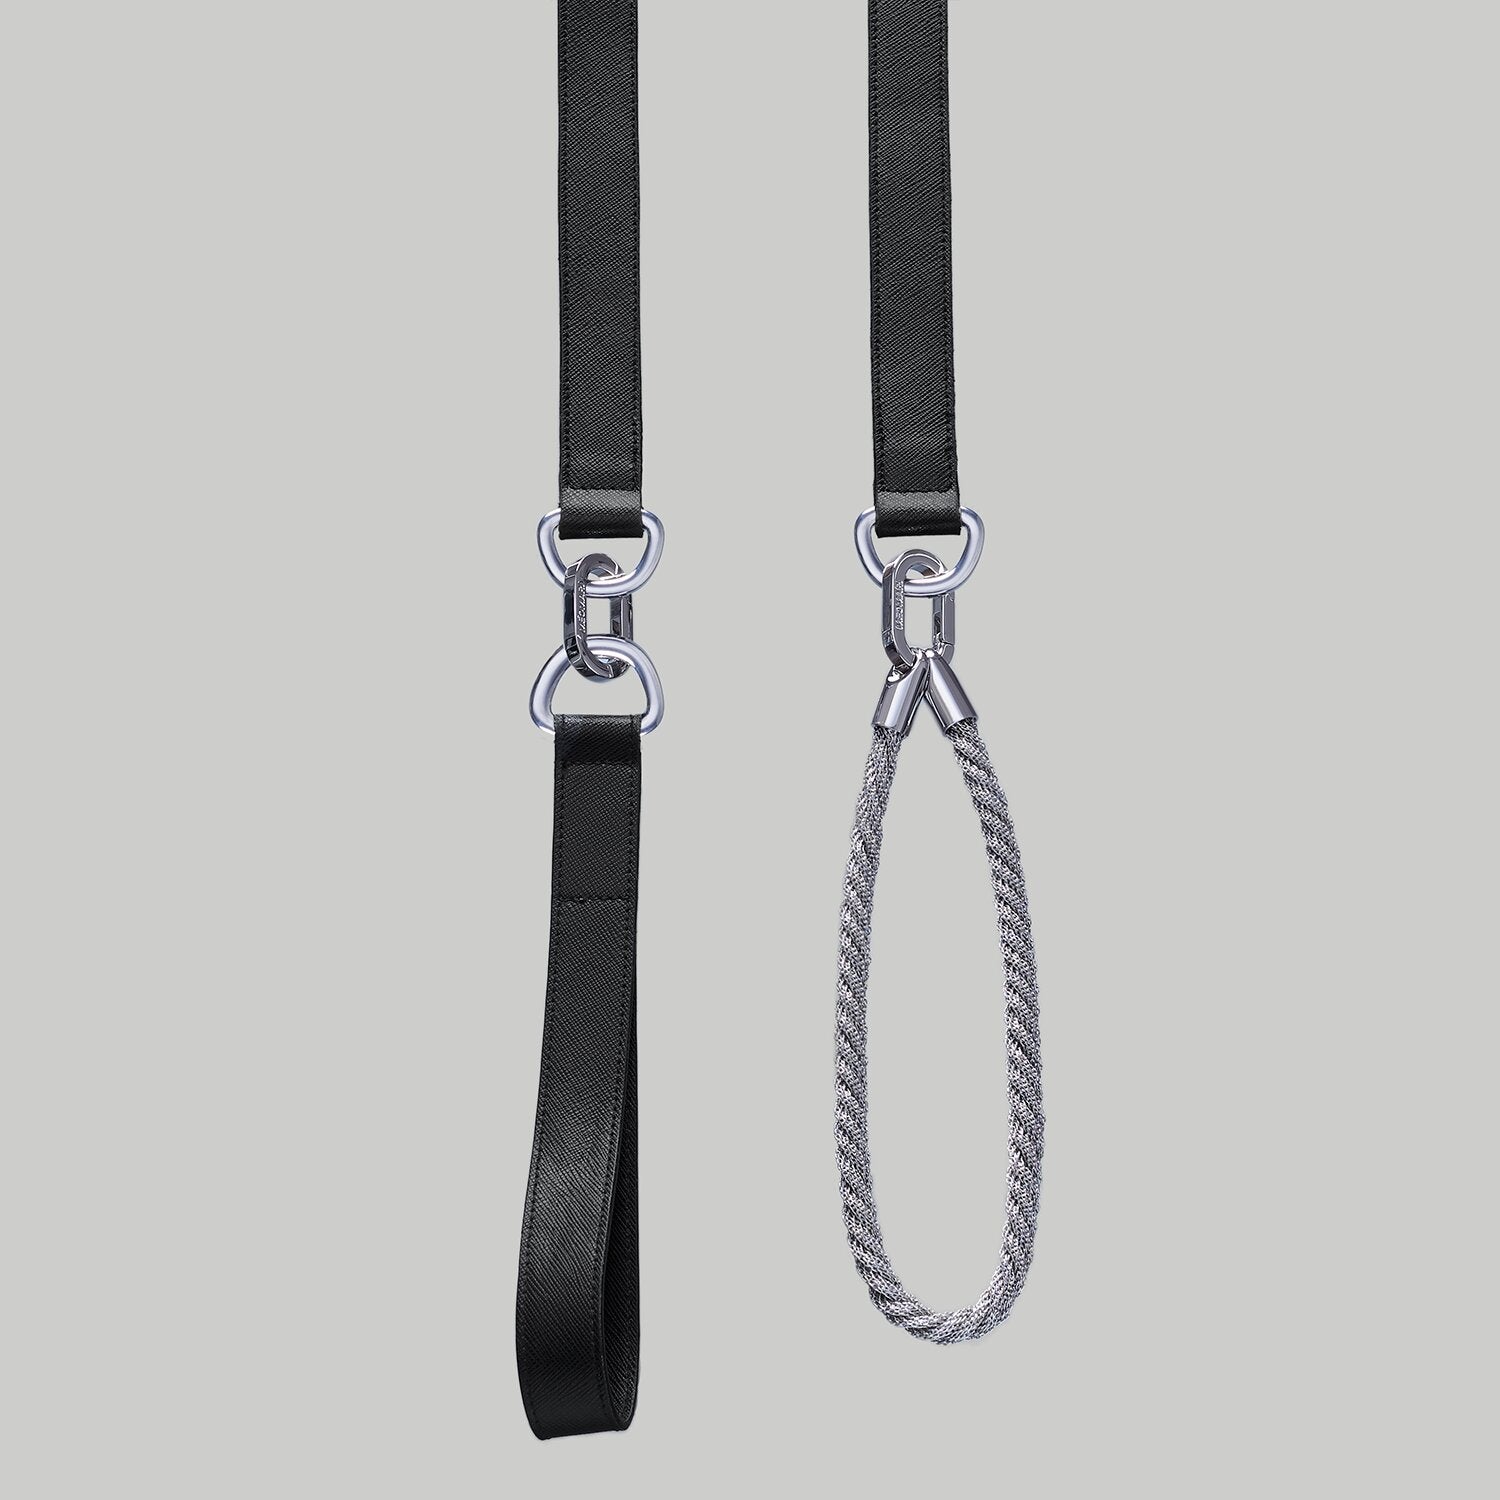 Luxury dog leash in black Saffiano leather with Palladium